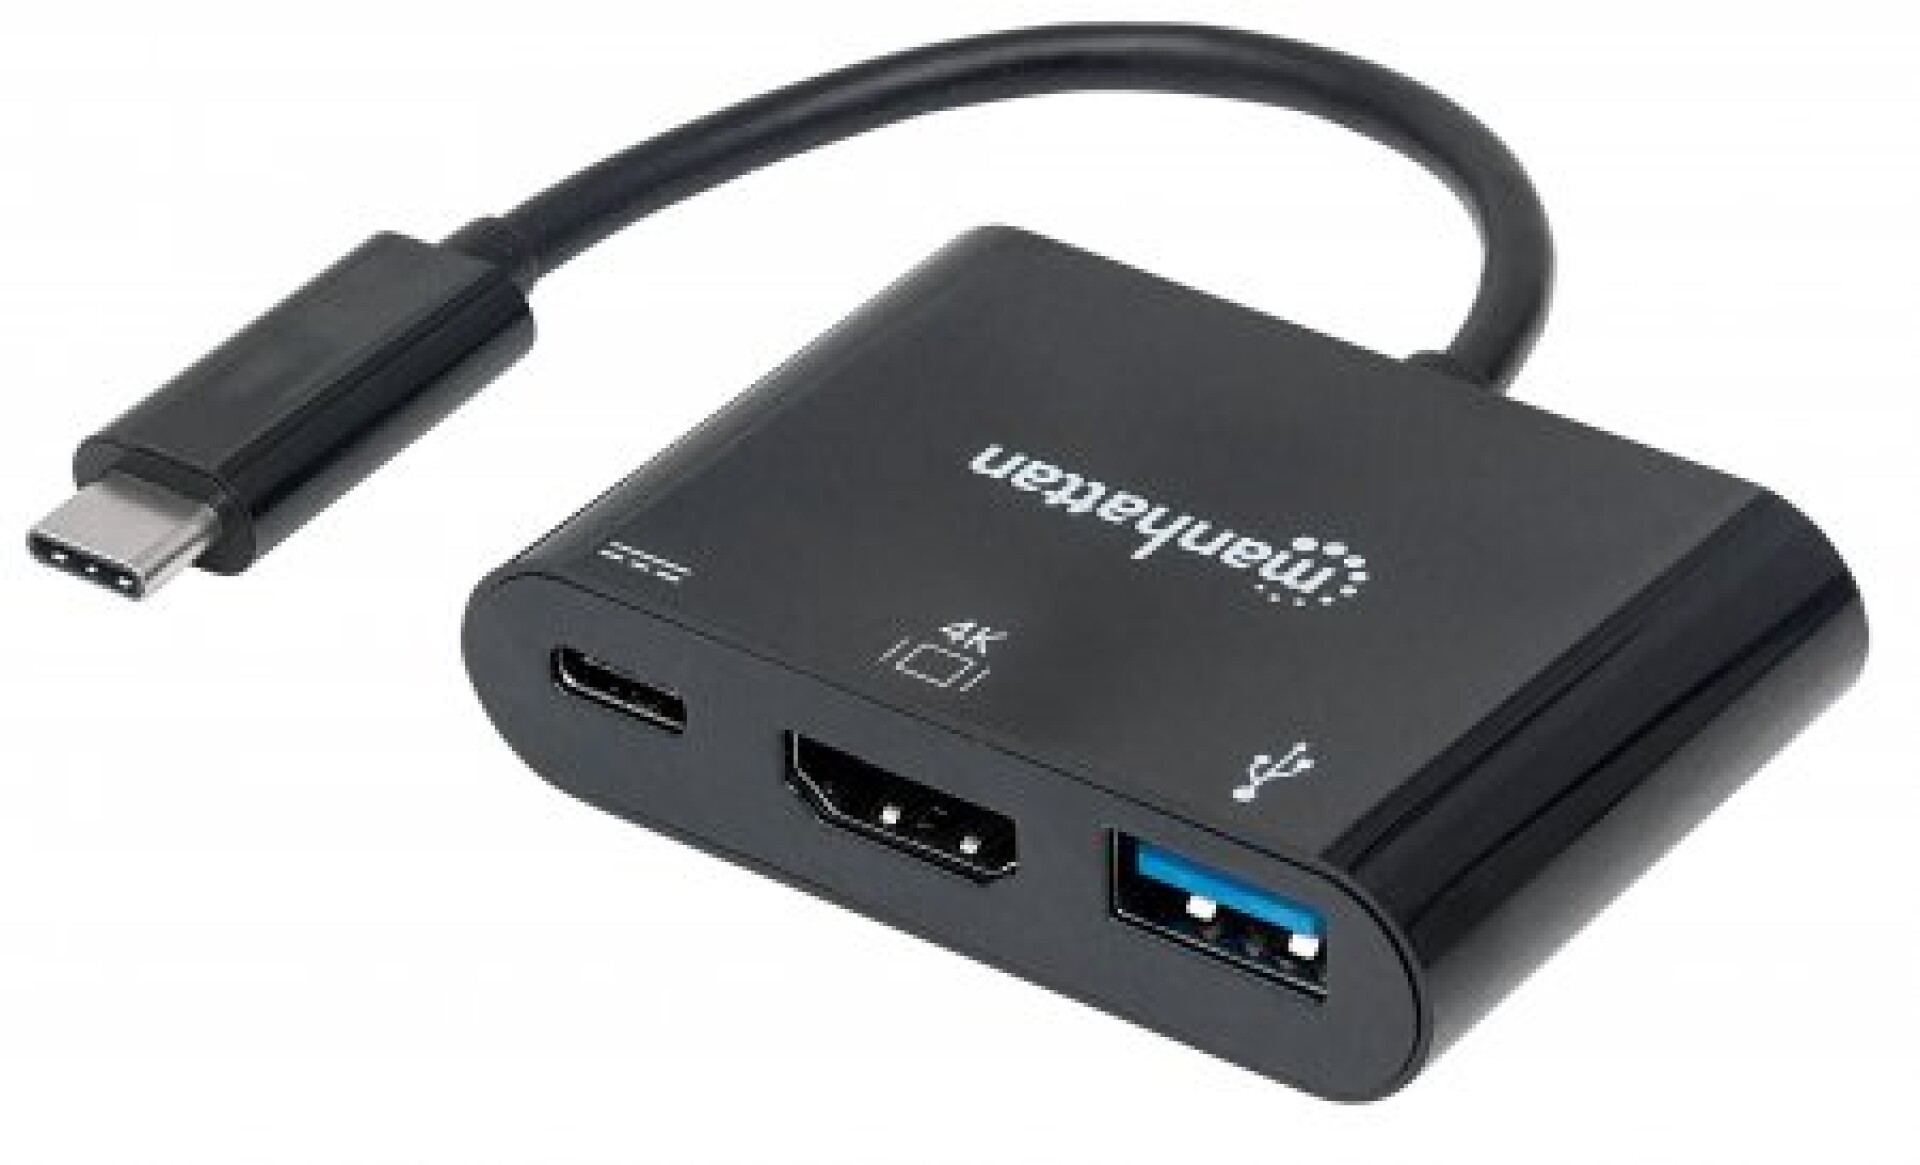 Conversor USB C a HDMI / USB 3.0 / USB C Manhattan - Conversor Usb C A Hdmi / Usb 3.0 / Usb C Manhattan 